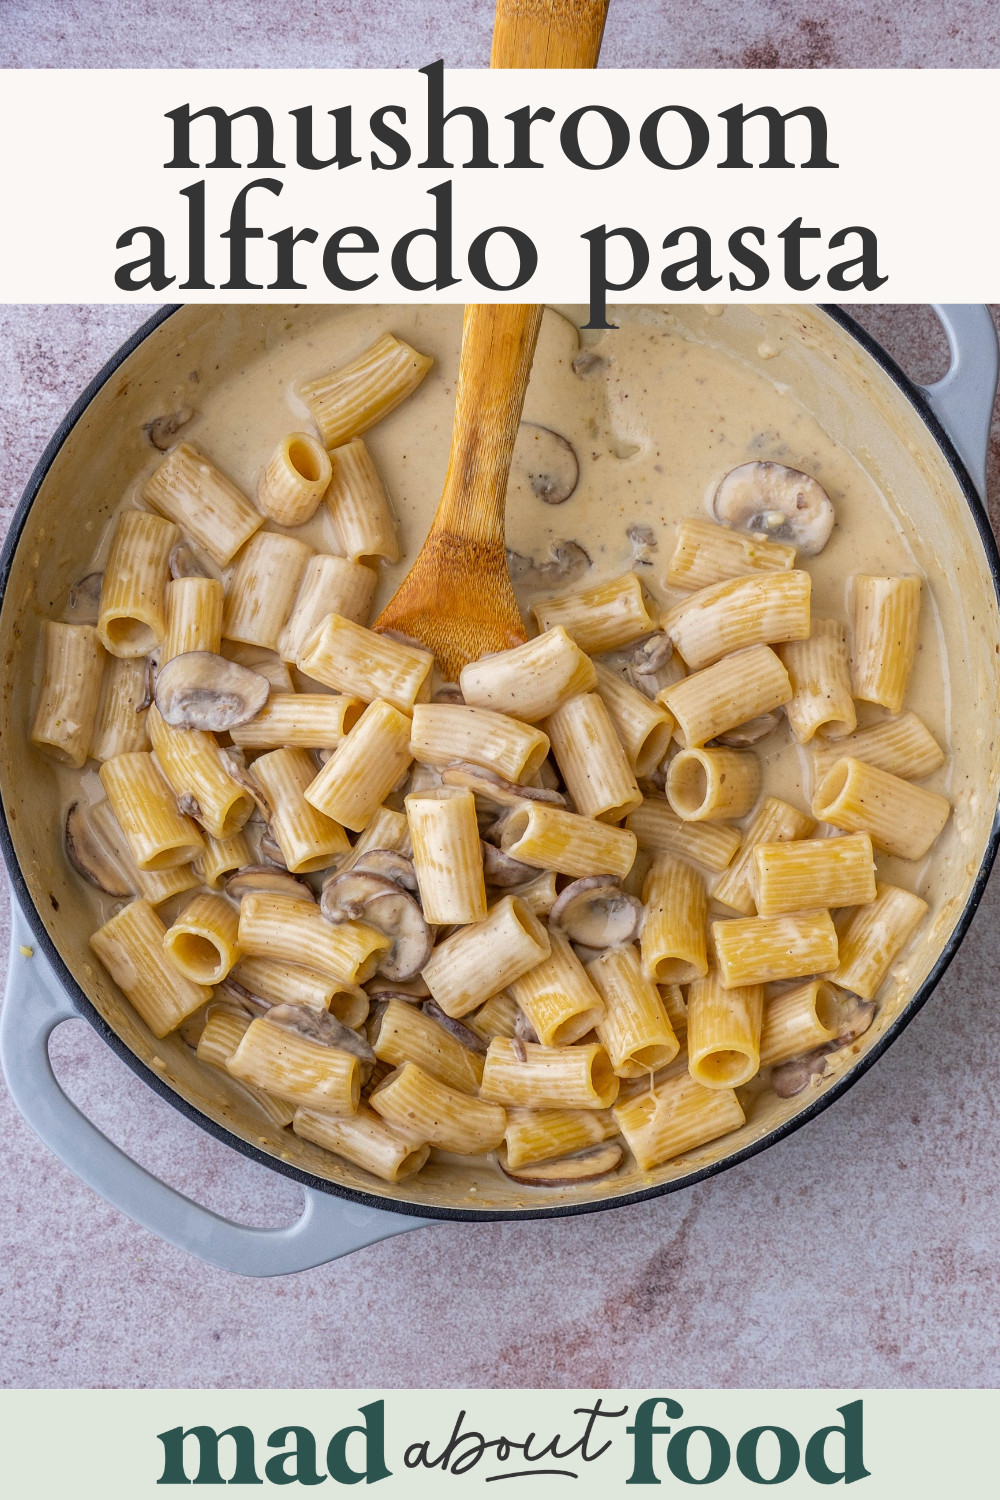 Image for pinning mushroom alfredo pasta recipe on pinterest 